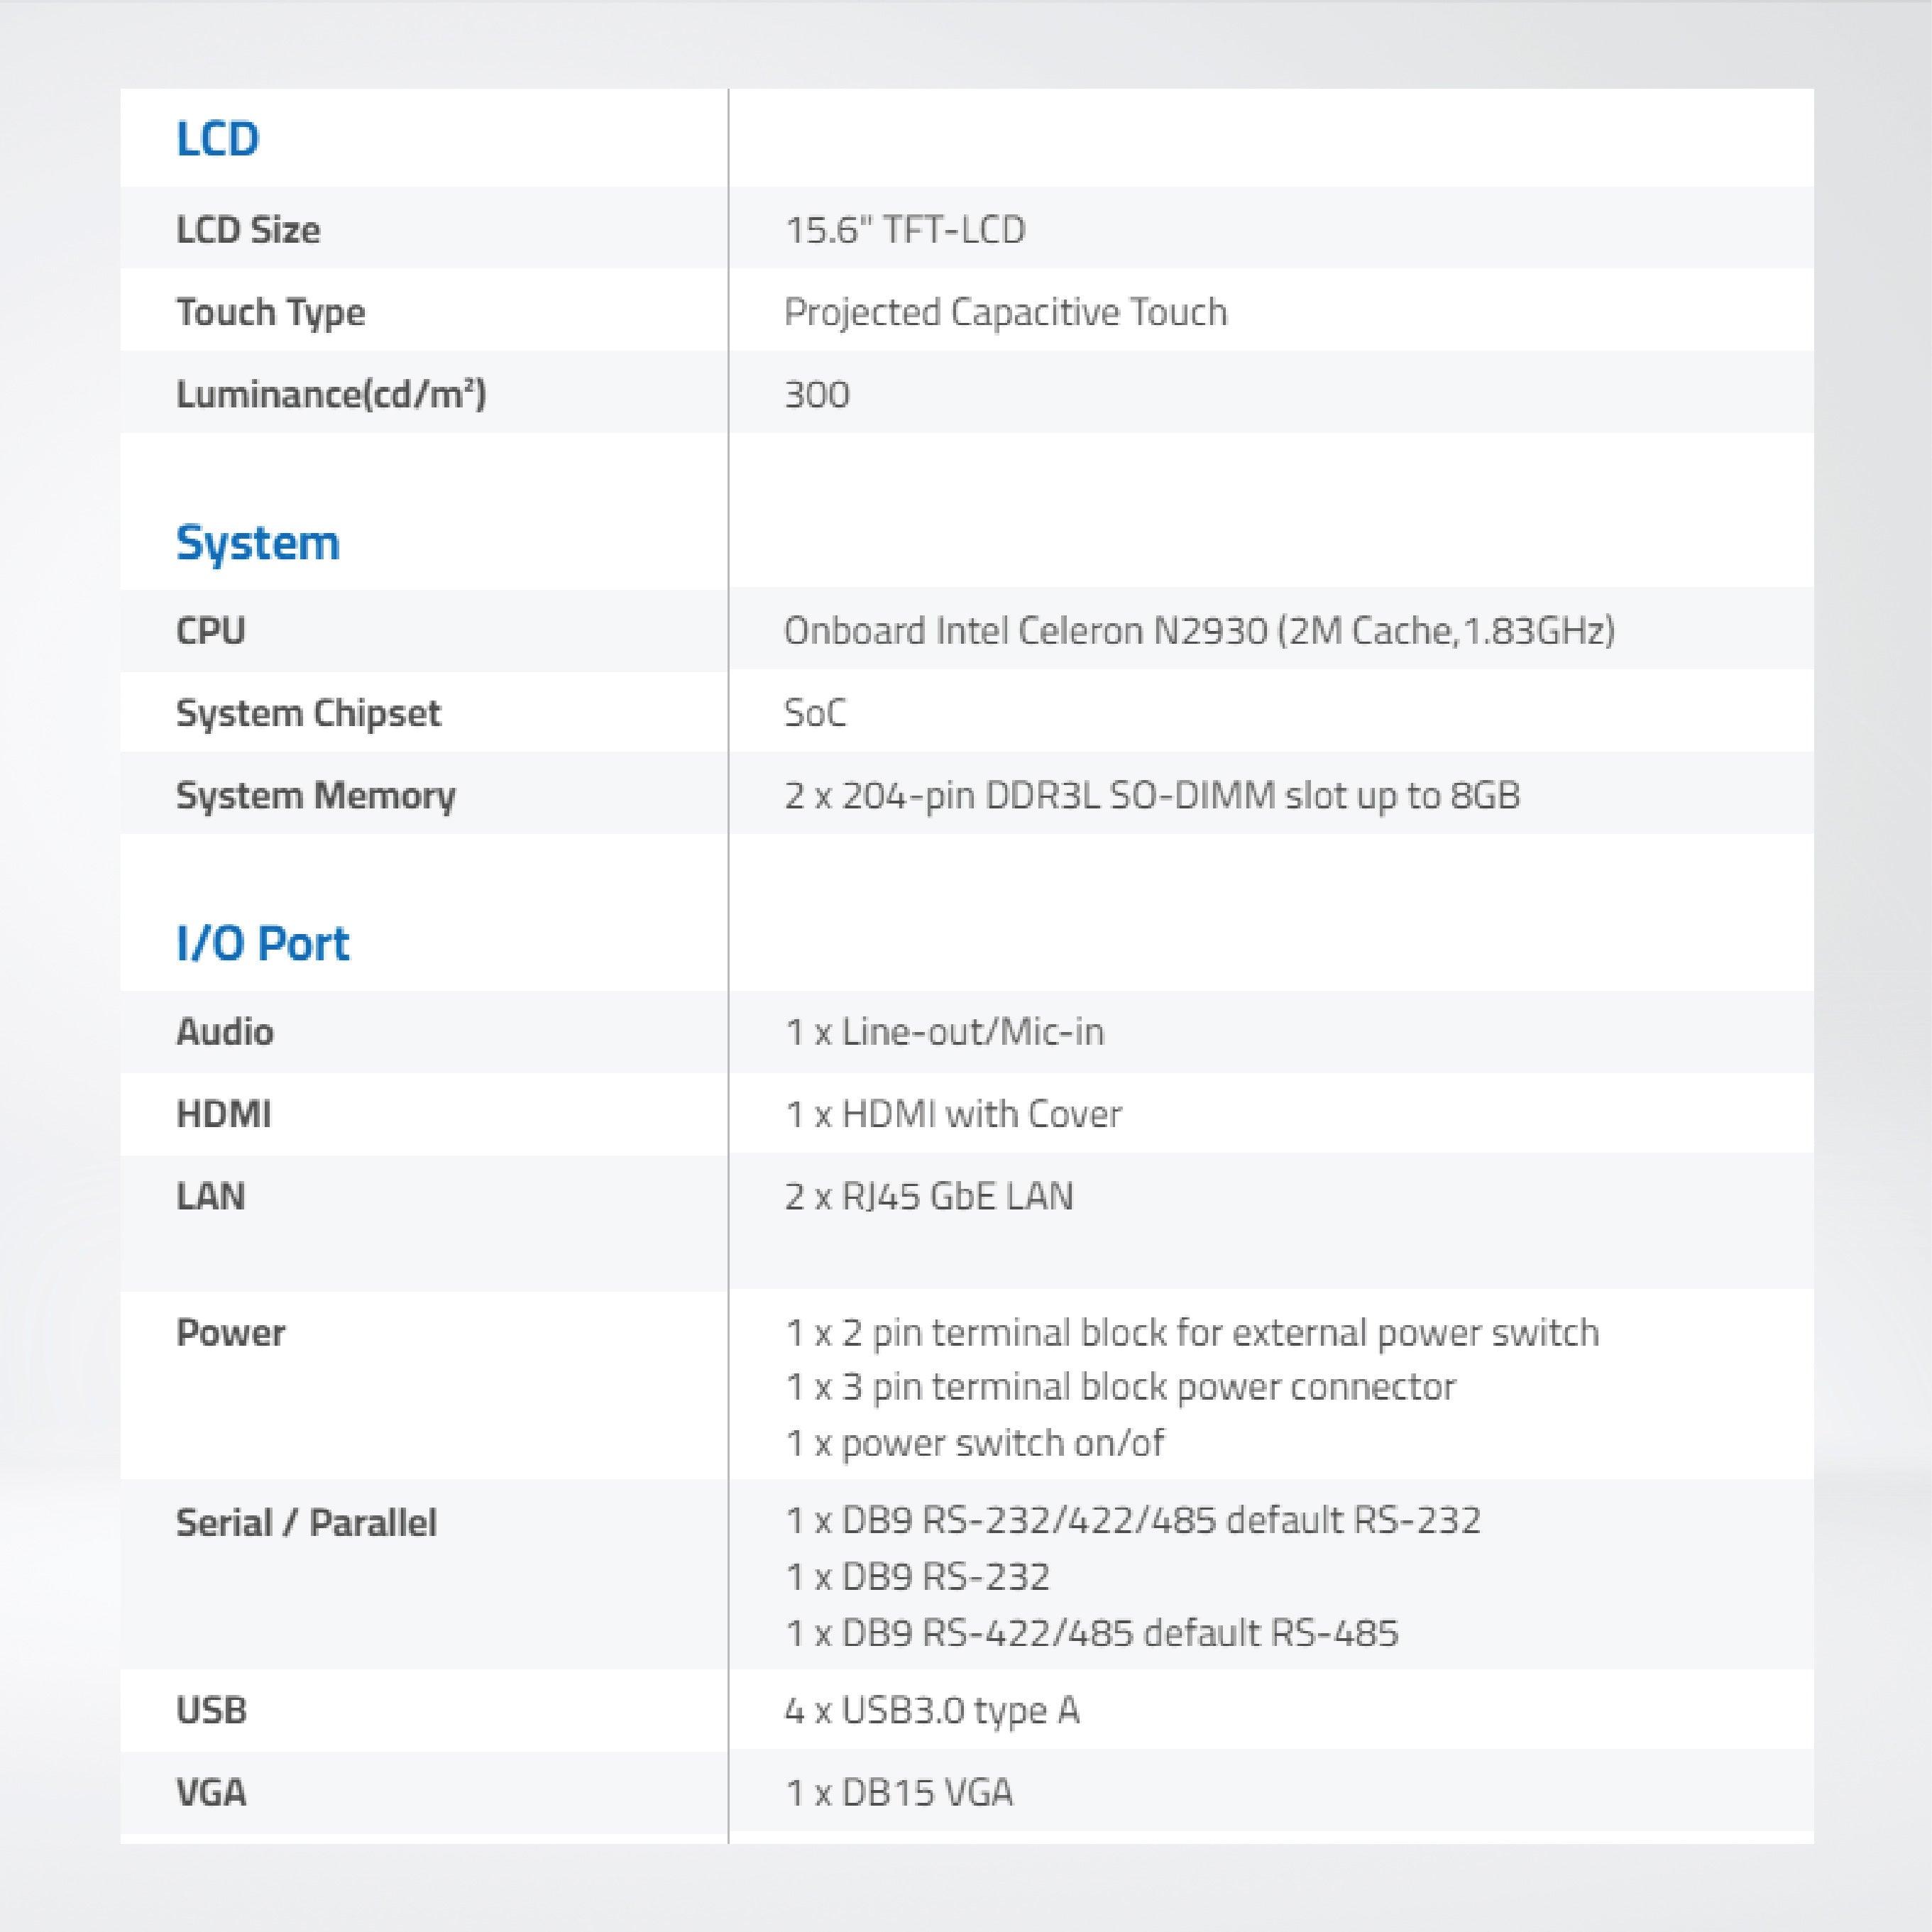 ViPAC-816P 15.6” Intel Celeron N2930 Fanless Expandable Panel PC - Riverplus